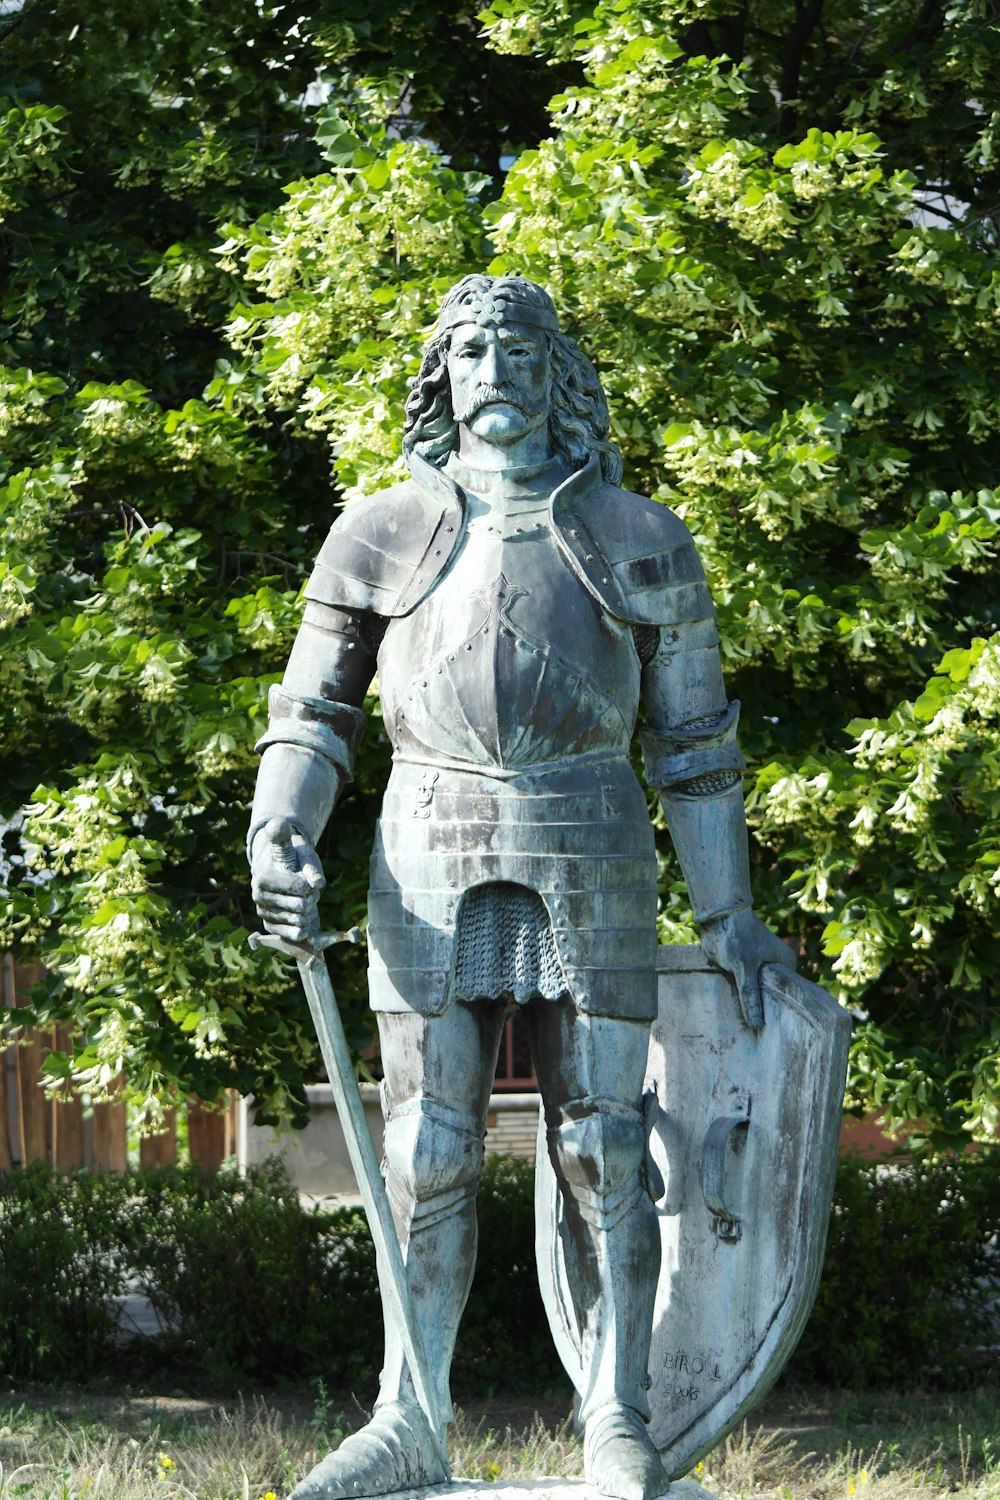 una estatua de una persona sosteniendo una espada